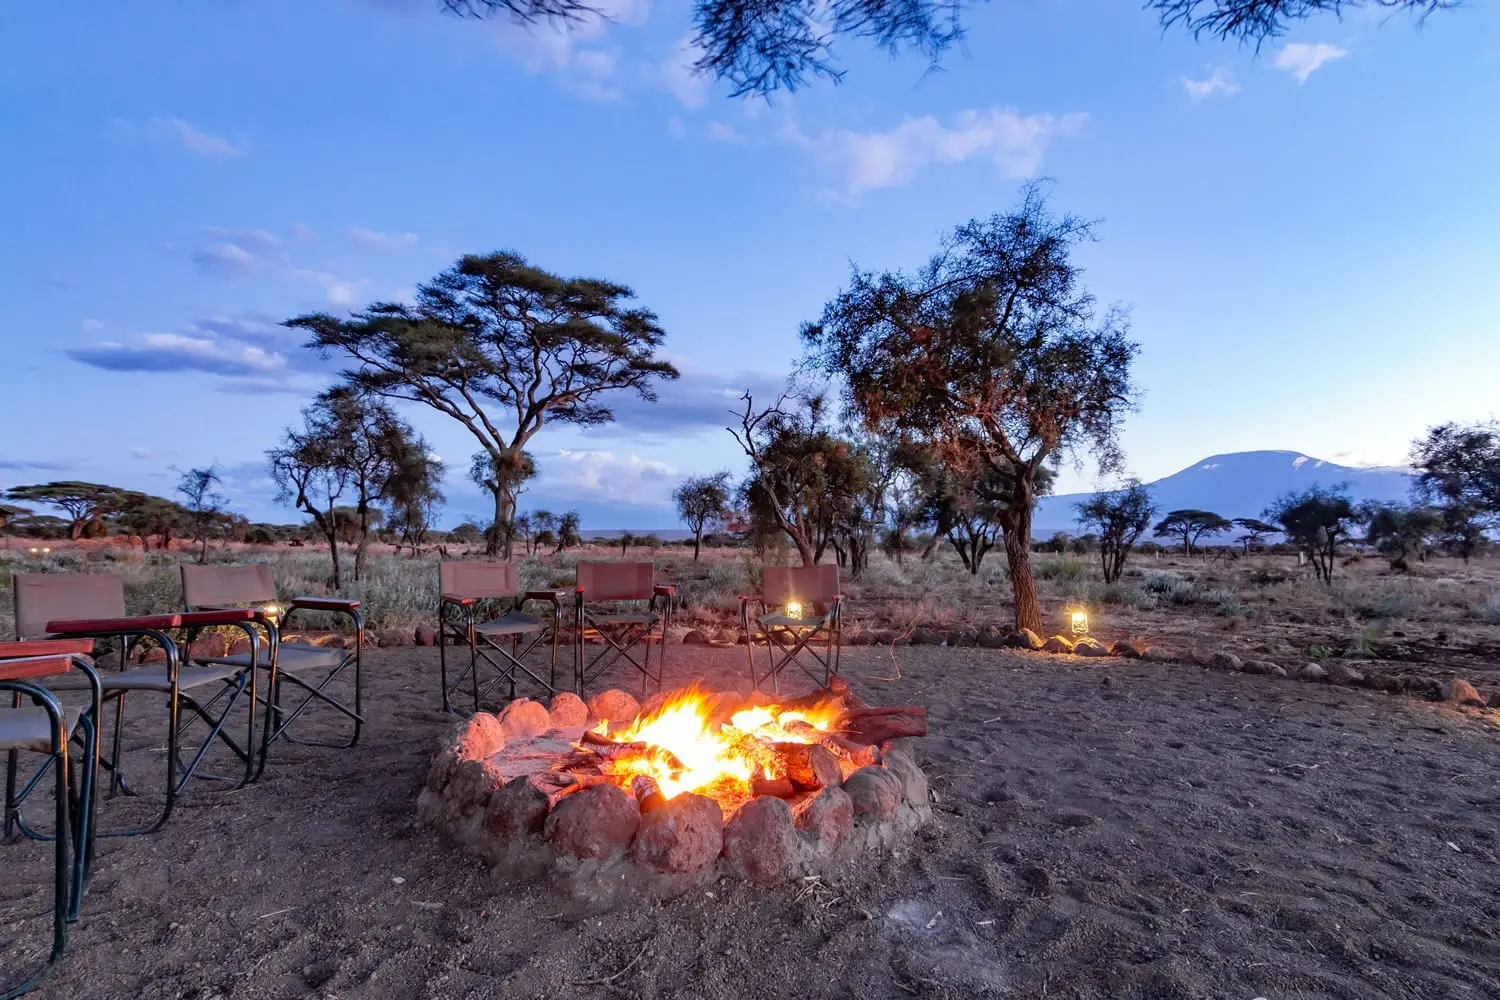 Bonfire at a luxury Kenya safari lodge in Masai Mara